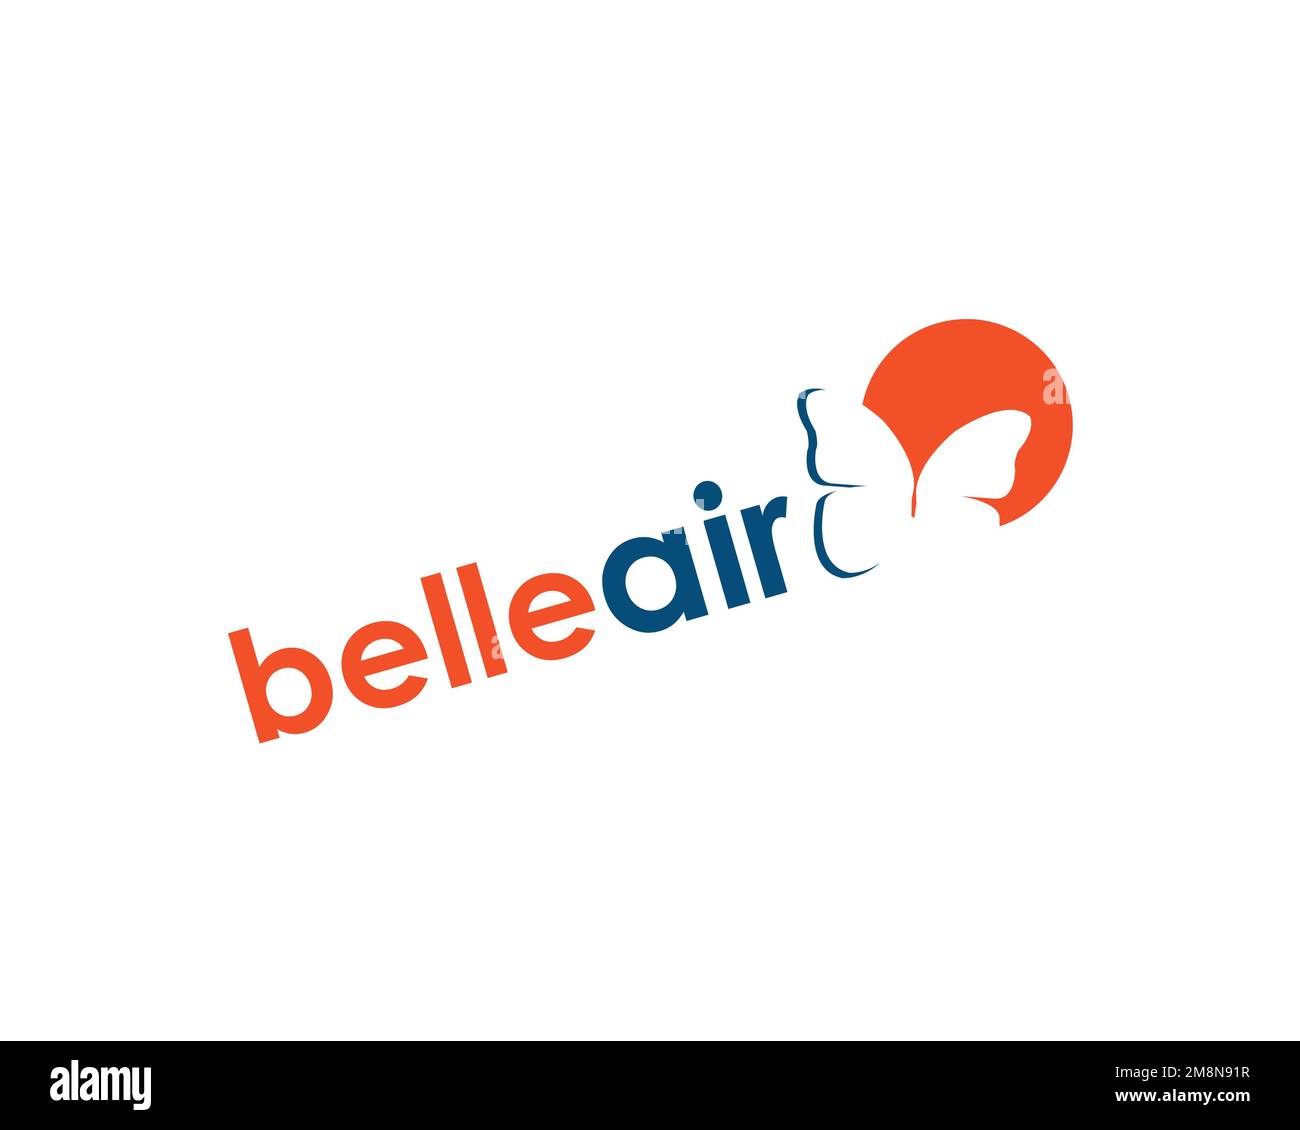 Belle Air Europe, logo ruotato, sfondo bianco Foto Stock